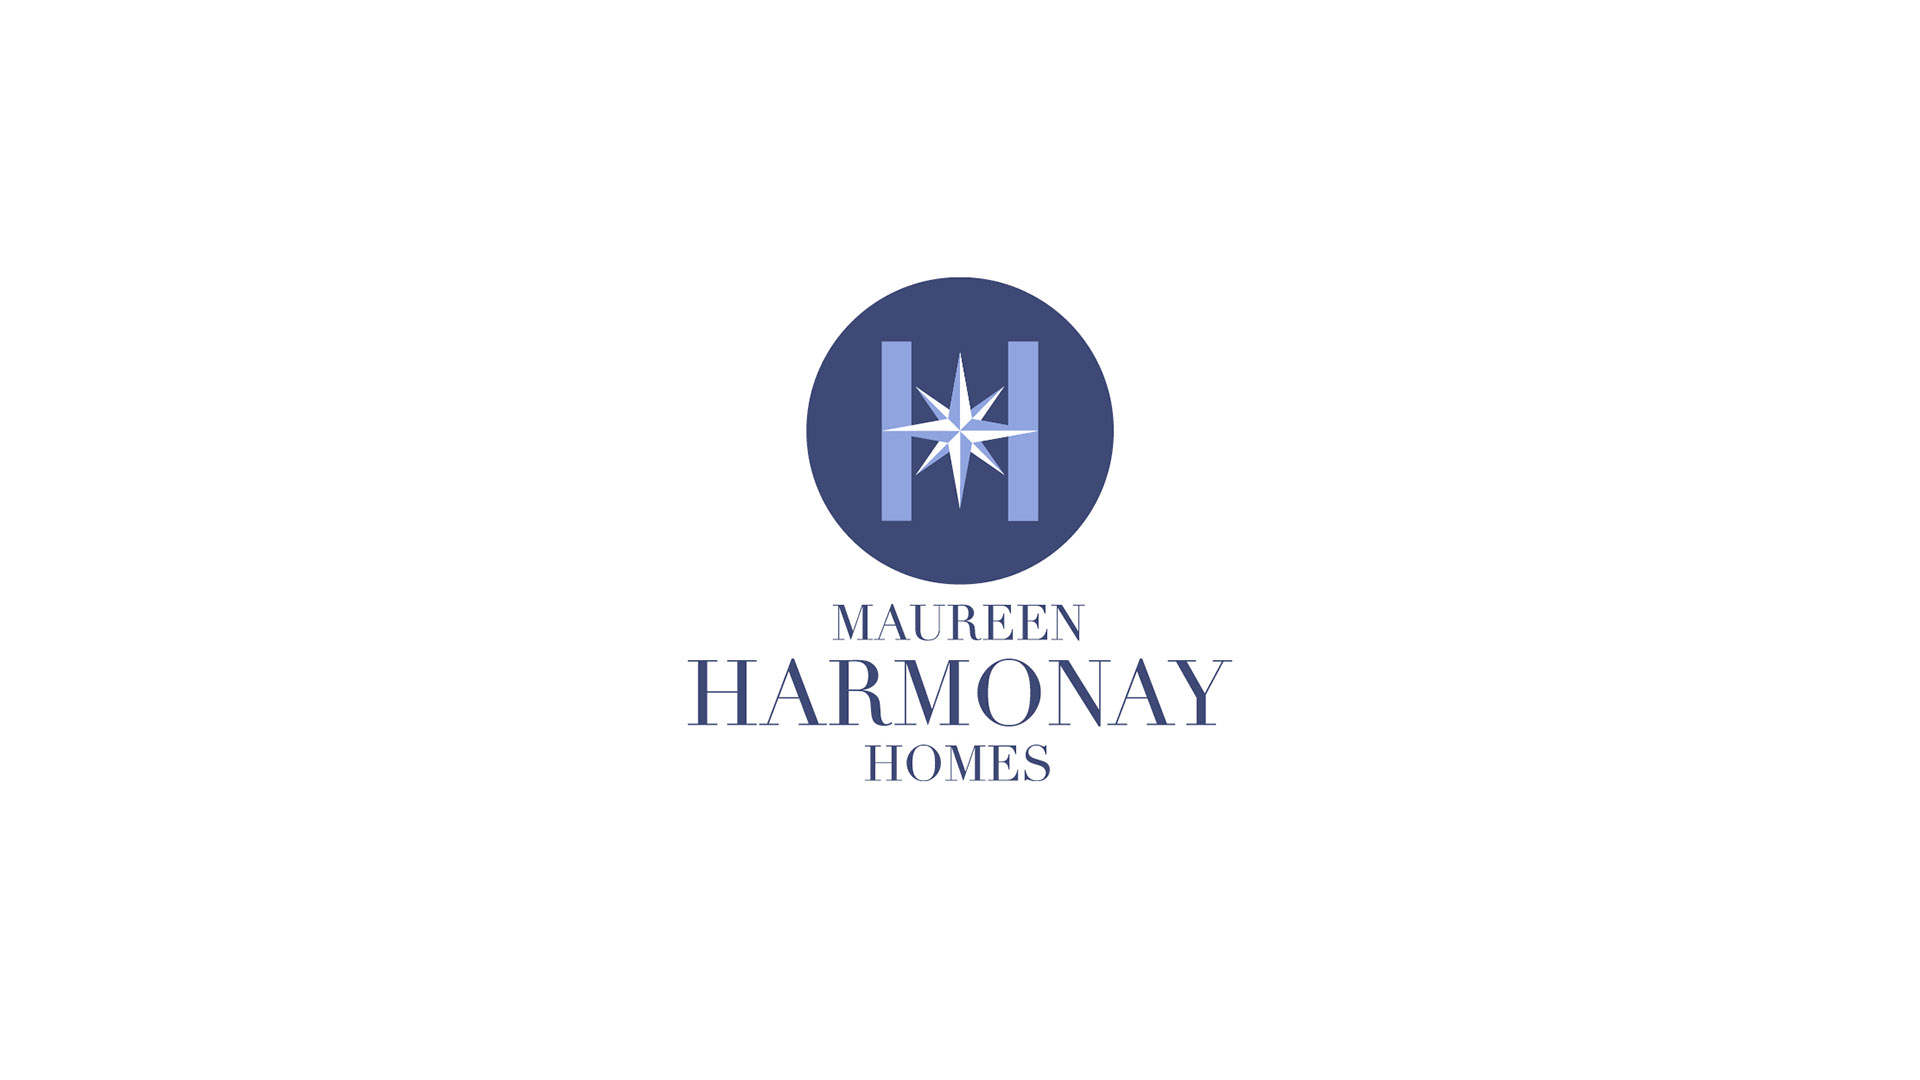 maureen harmonay homes logo on white